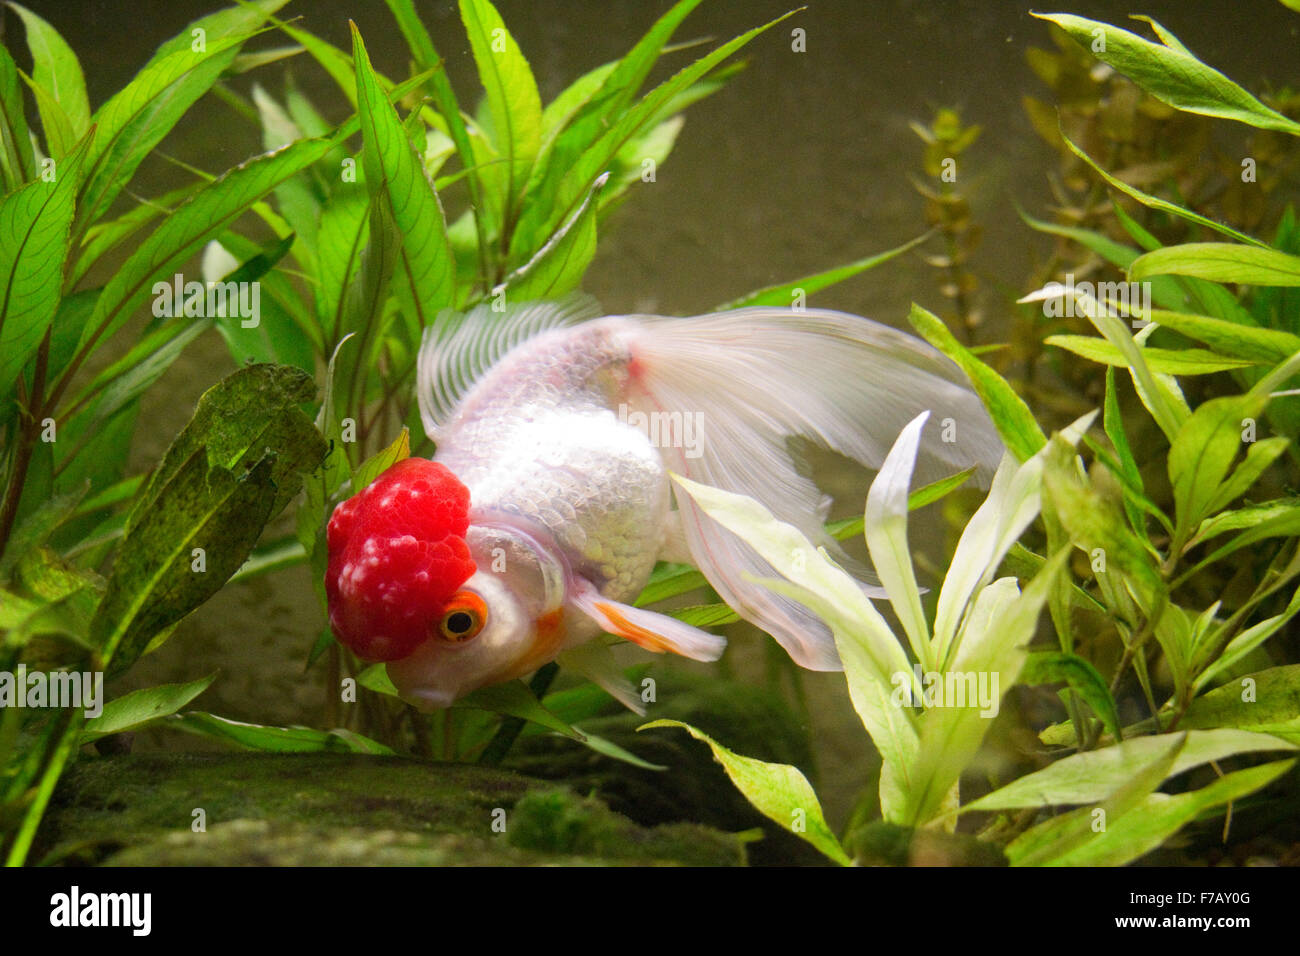 Pesce Rosso Fantasia Immagini e Fotos Stock - Alamy